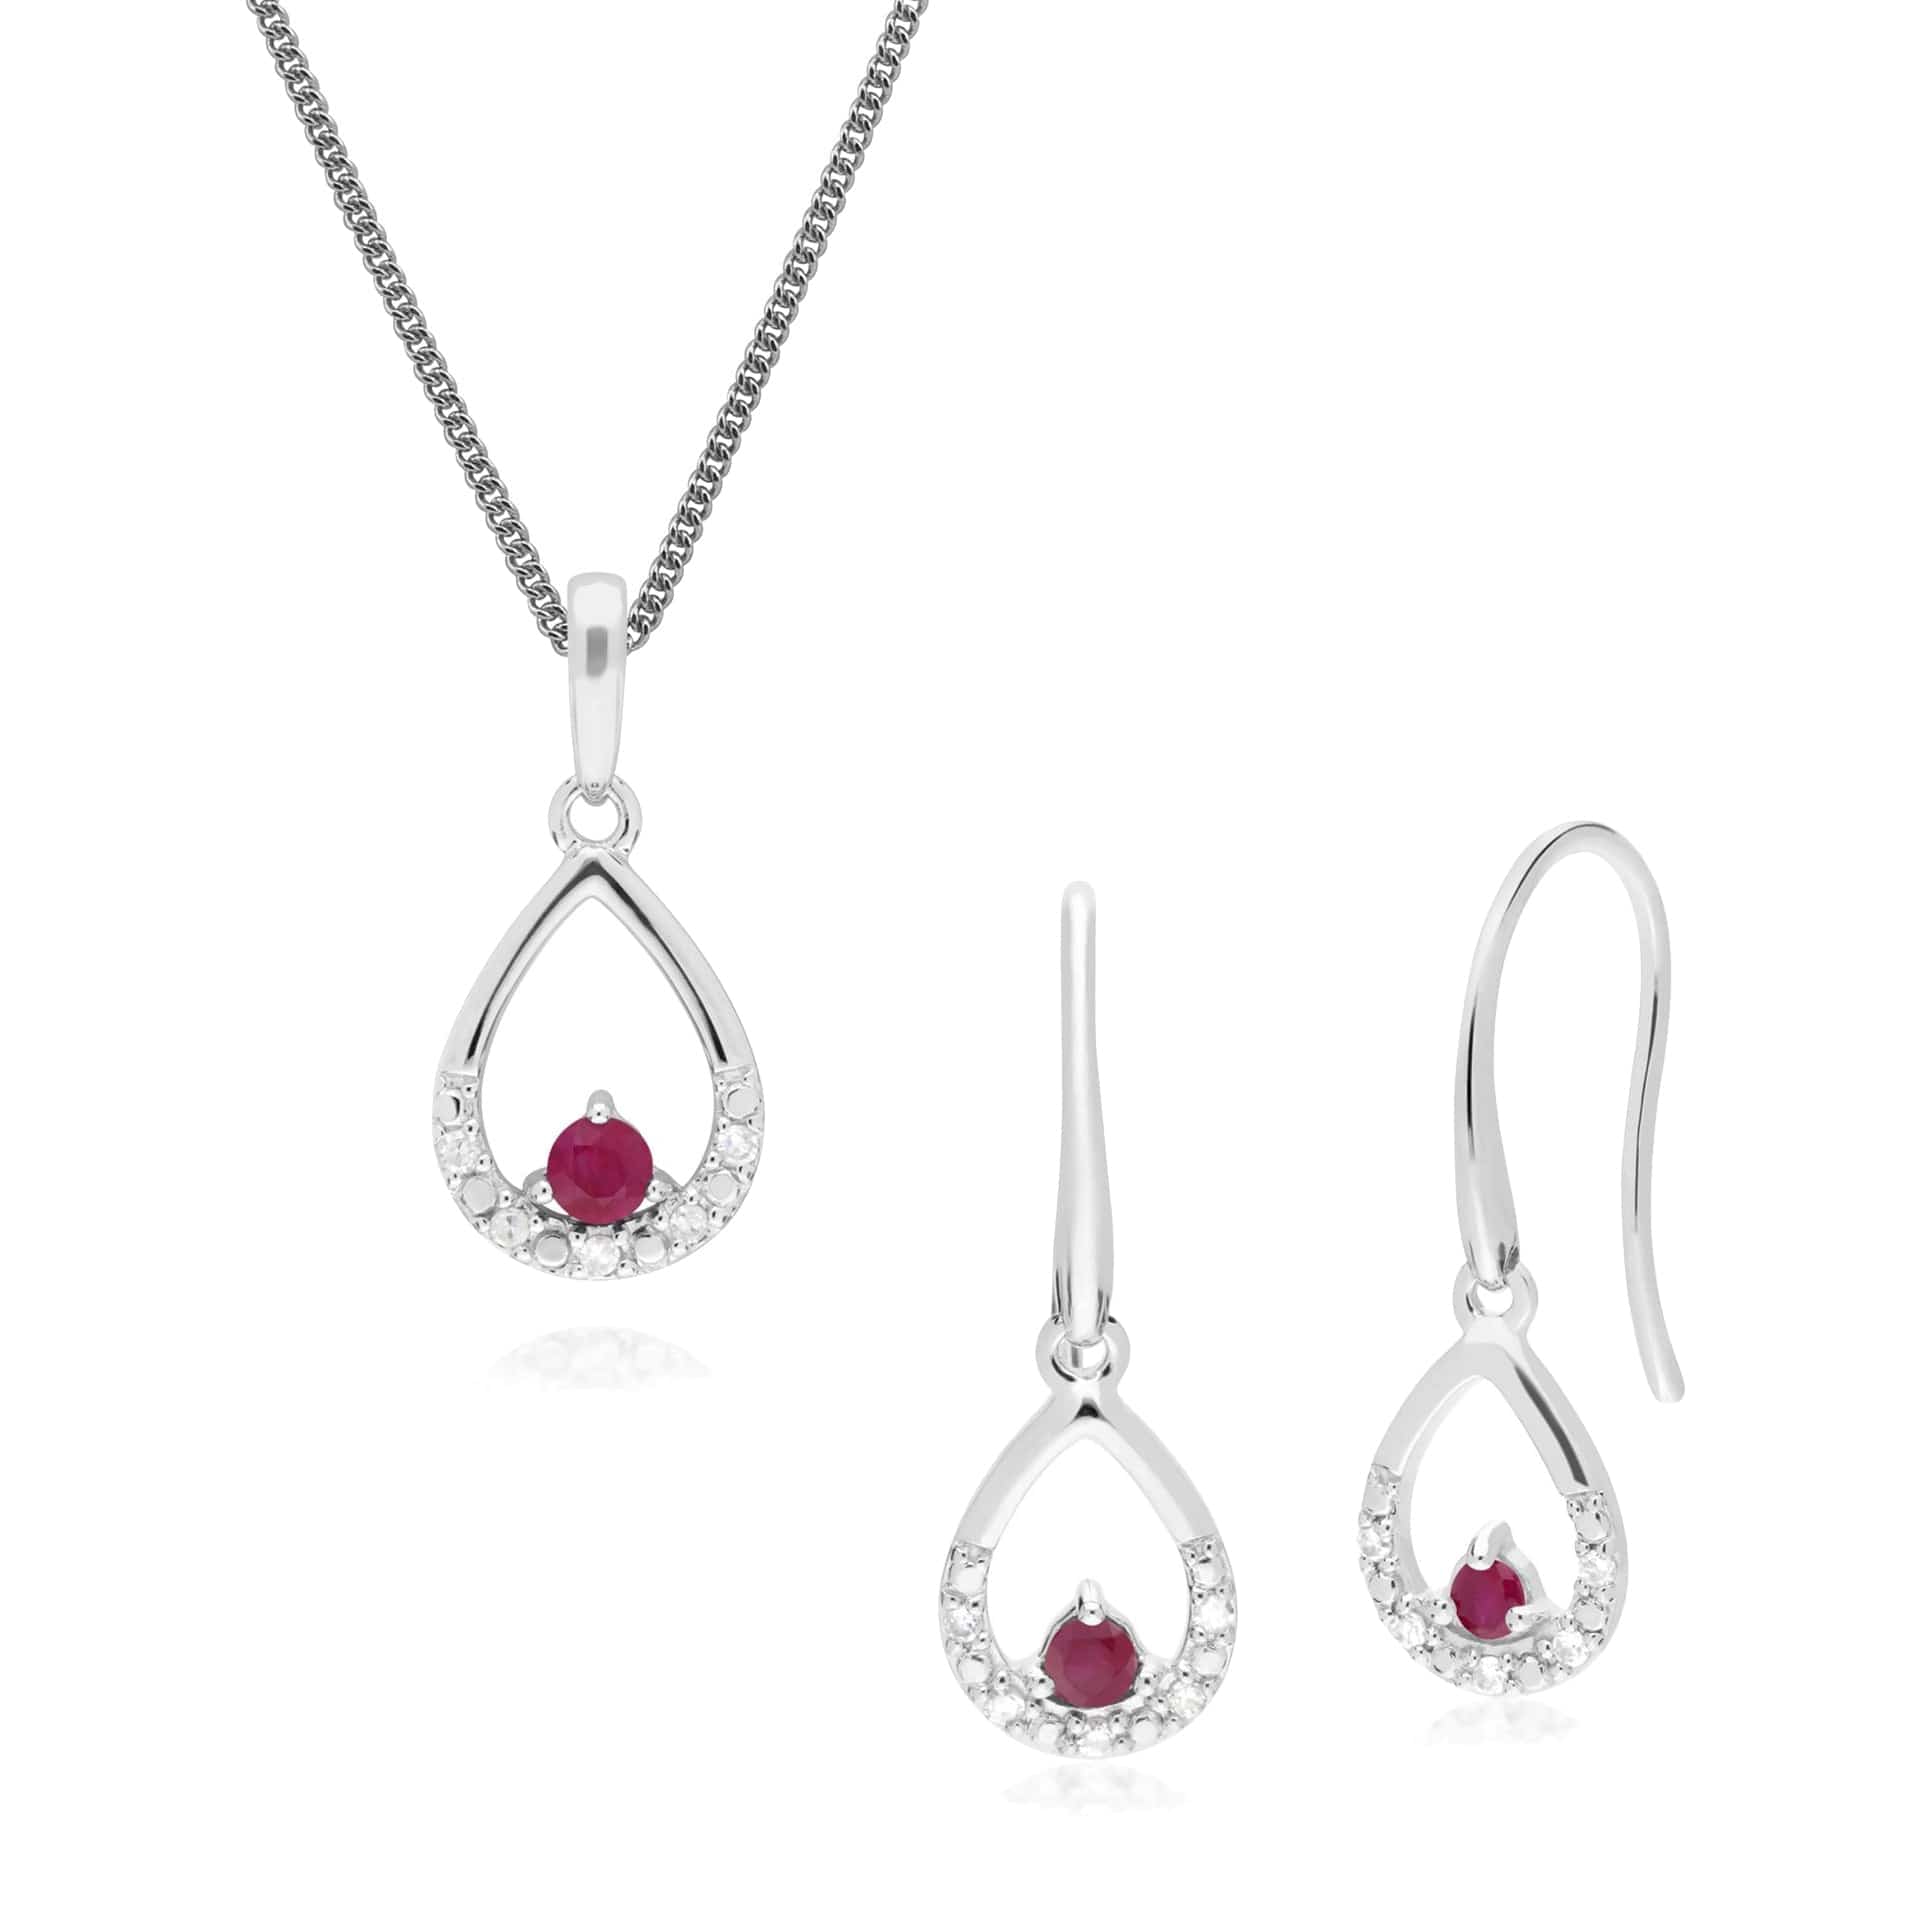 162E0259019-162P0220019 Classic Round Ruby & Diamond Tear Drop Earrings & Pendant Set in 9ct White Gold 1